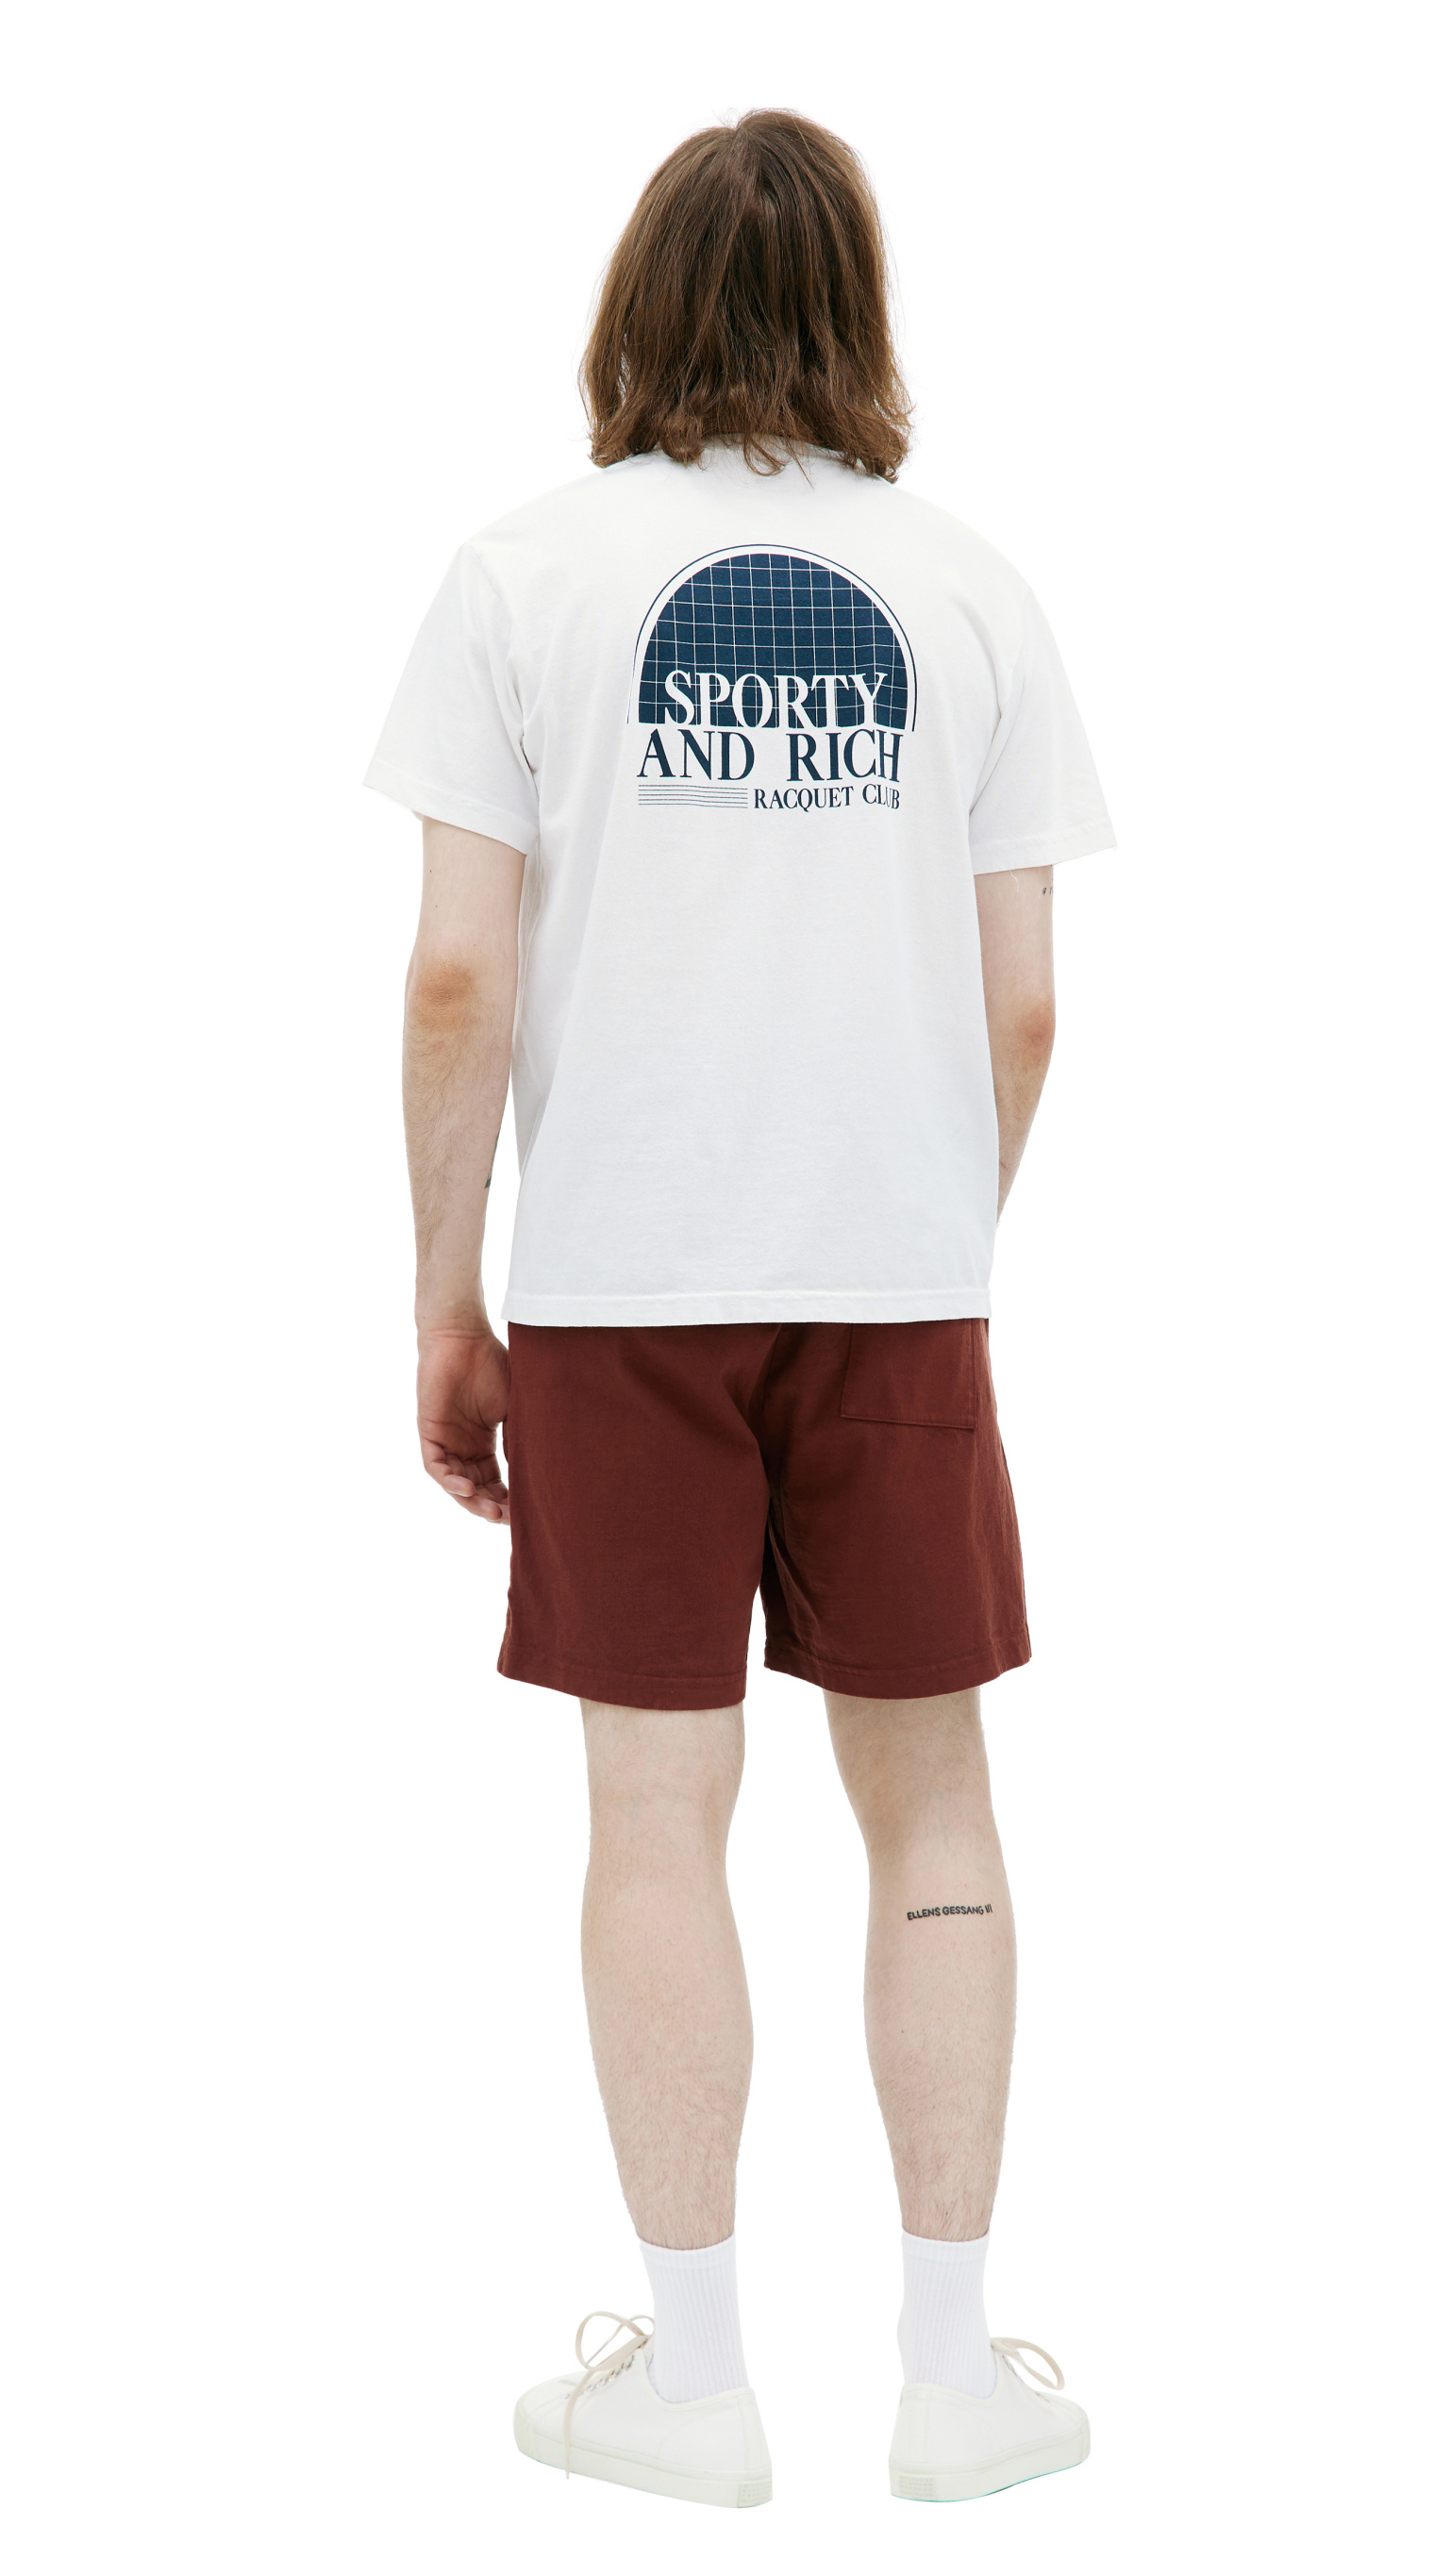 SPORTY & RICH \'Racquet club\' printed t-shirt